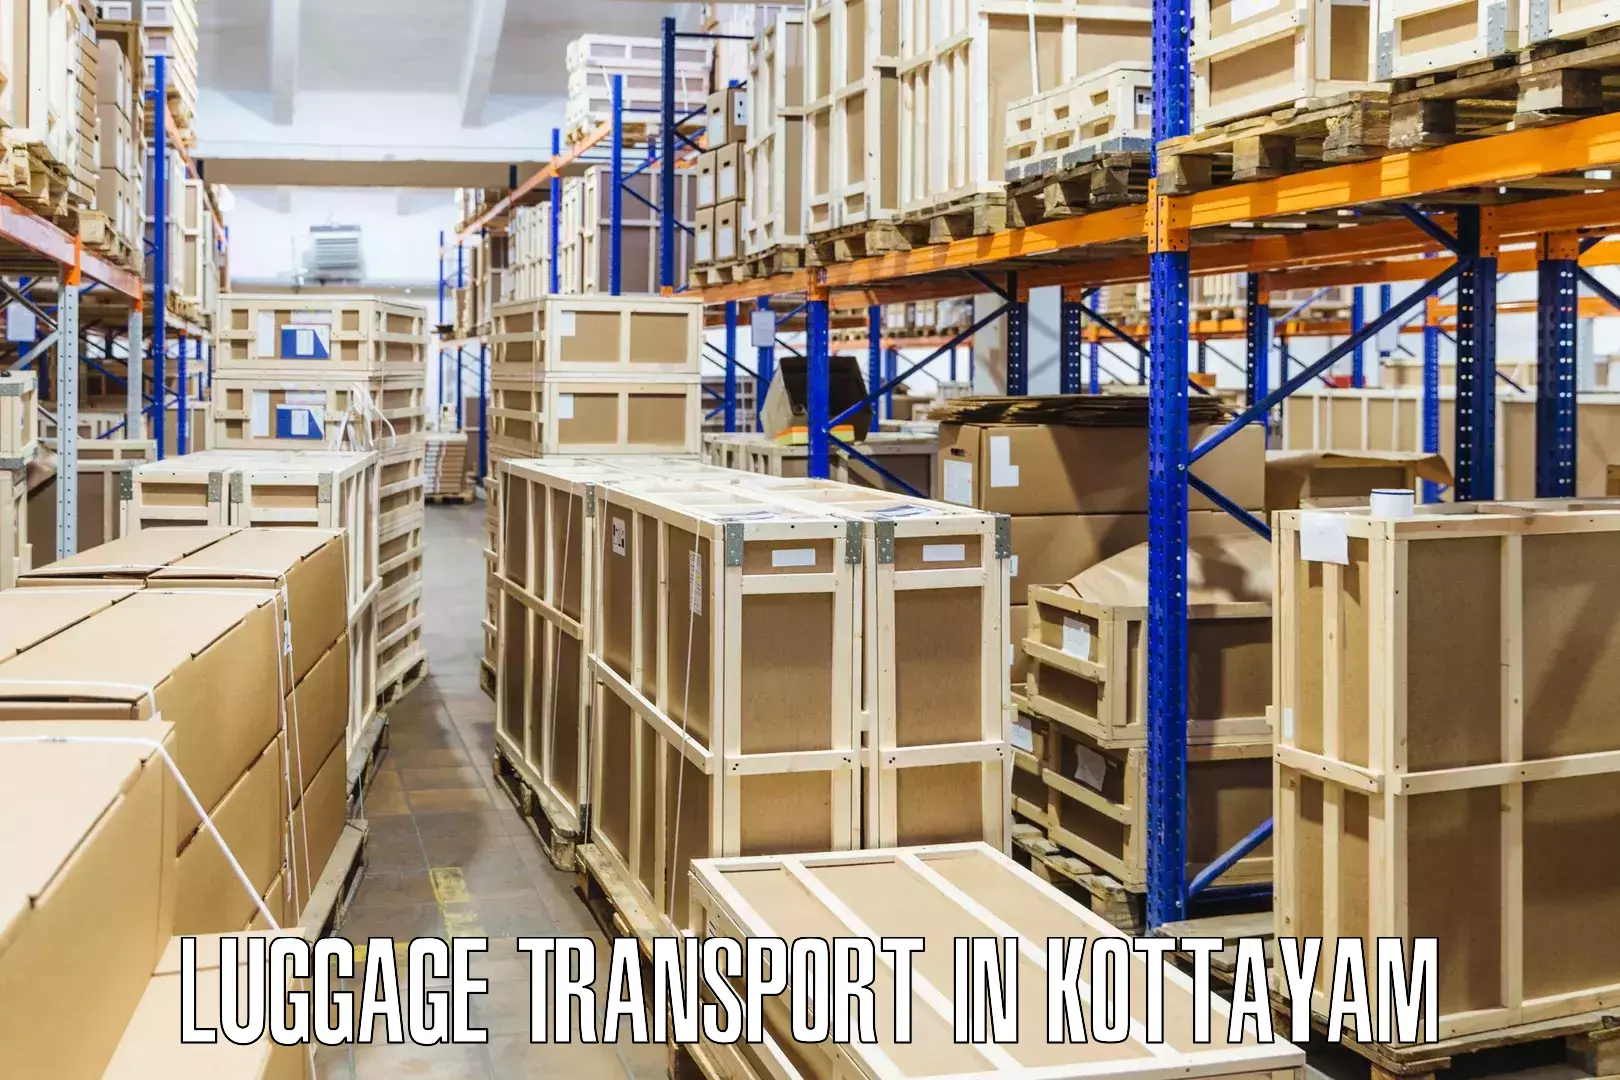 Luggage transport service in Kottayam